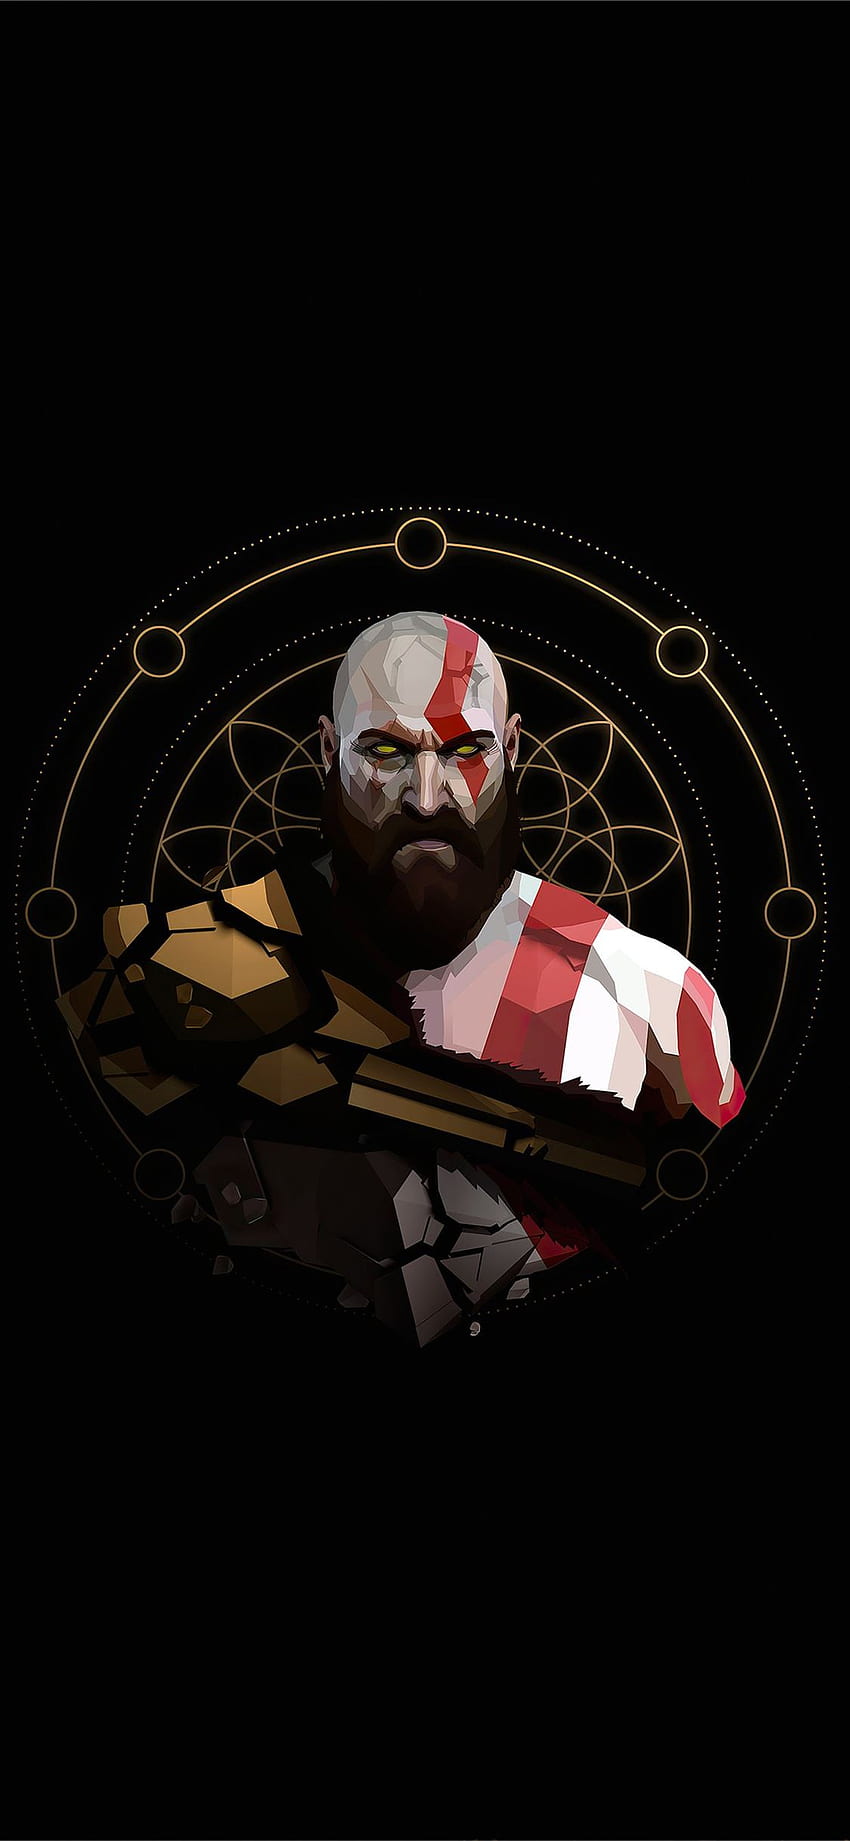 Lihat 18 Logo iPhone God Of War, Kratos wallpaper ponsel HD